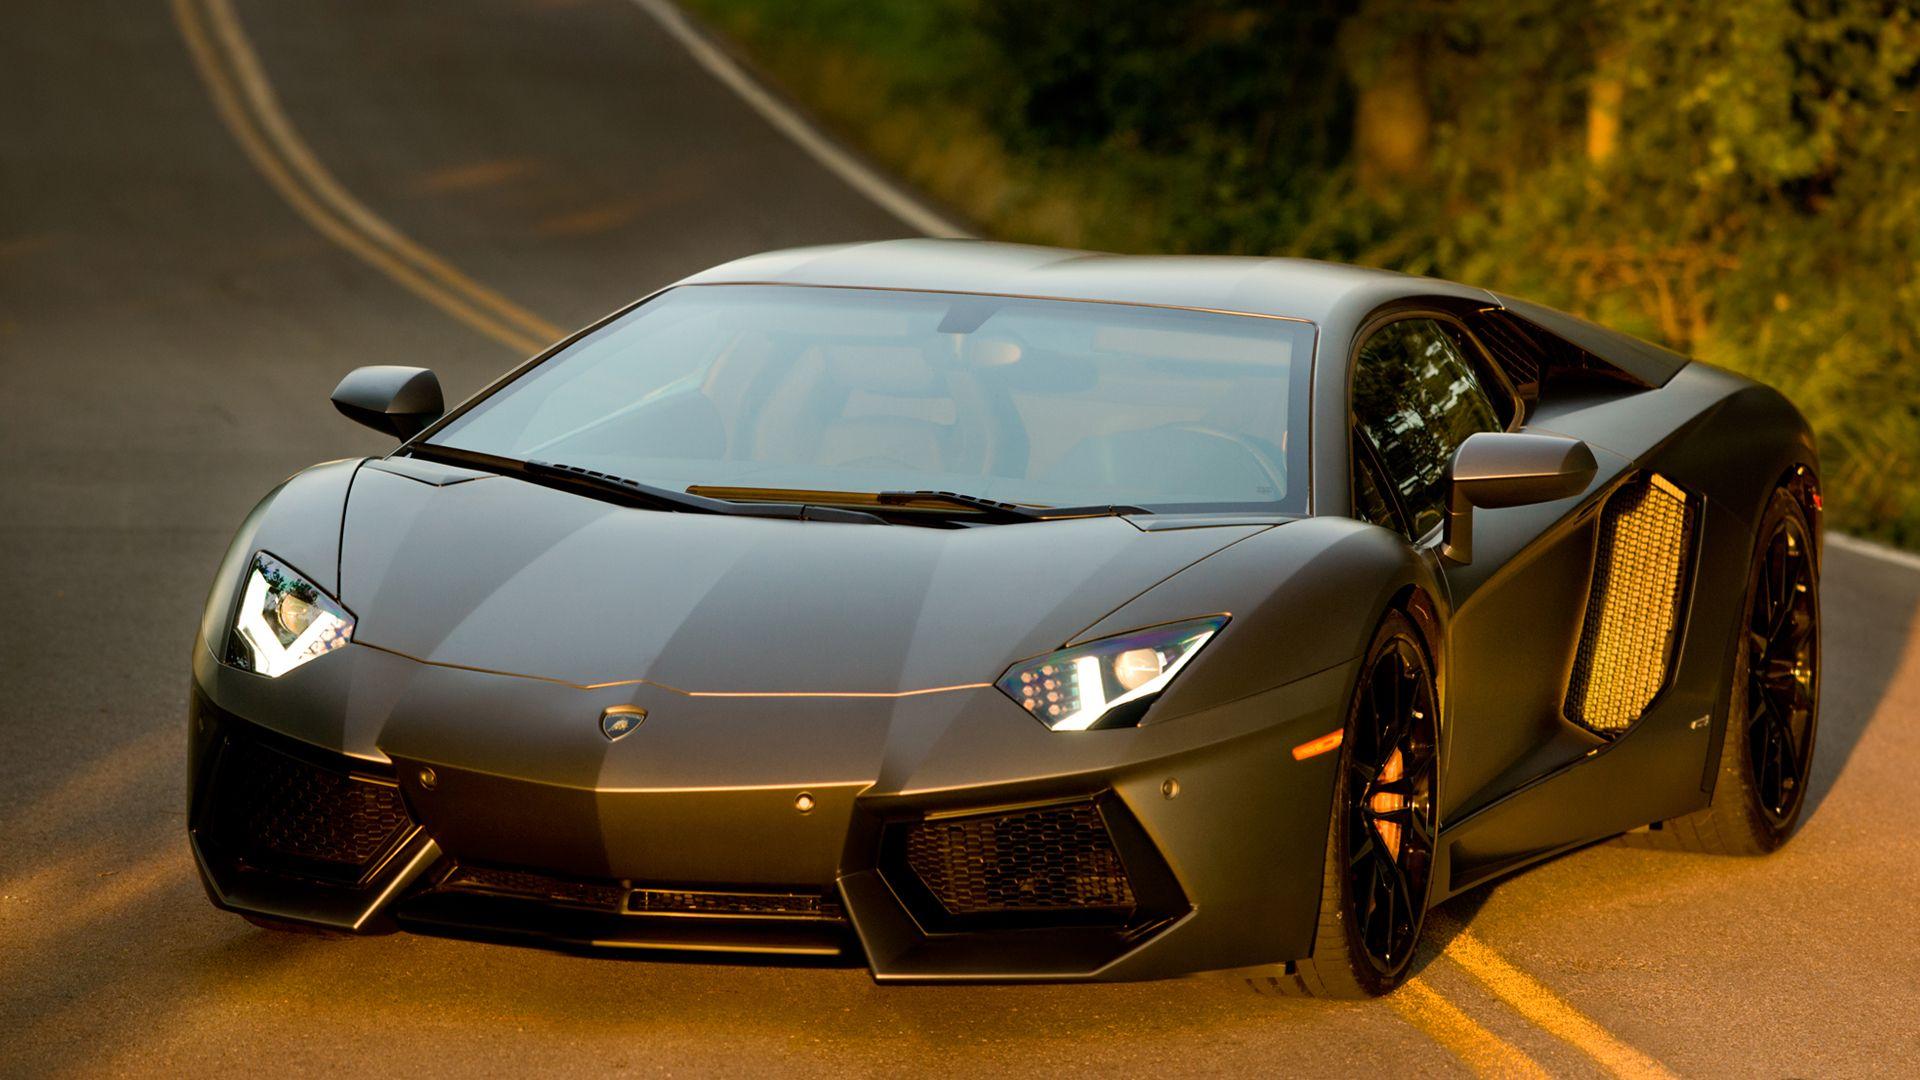 Best Lamborghini Cars Full HD Wallpaper High Quality Widescreen